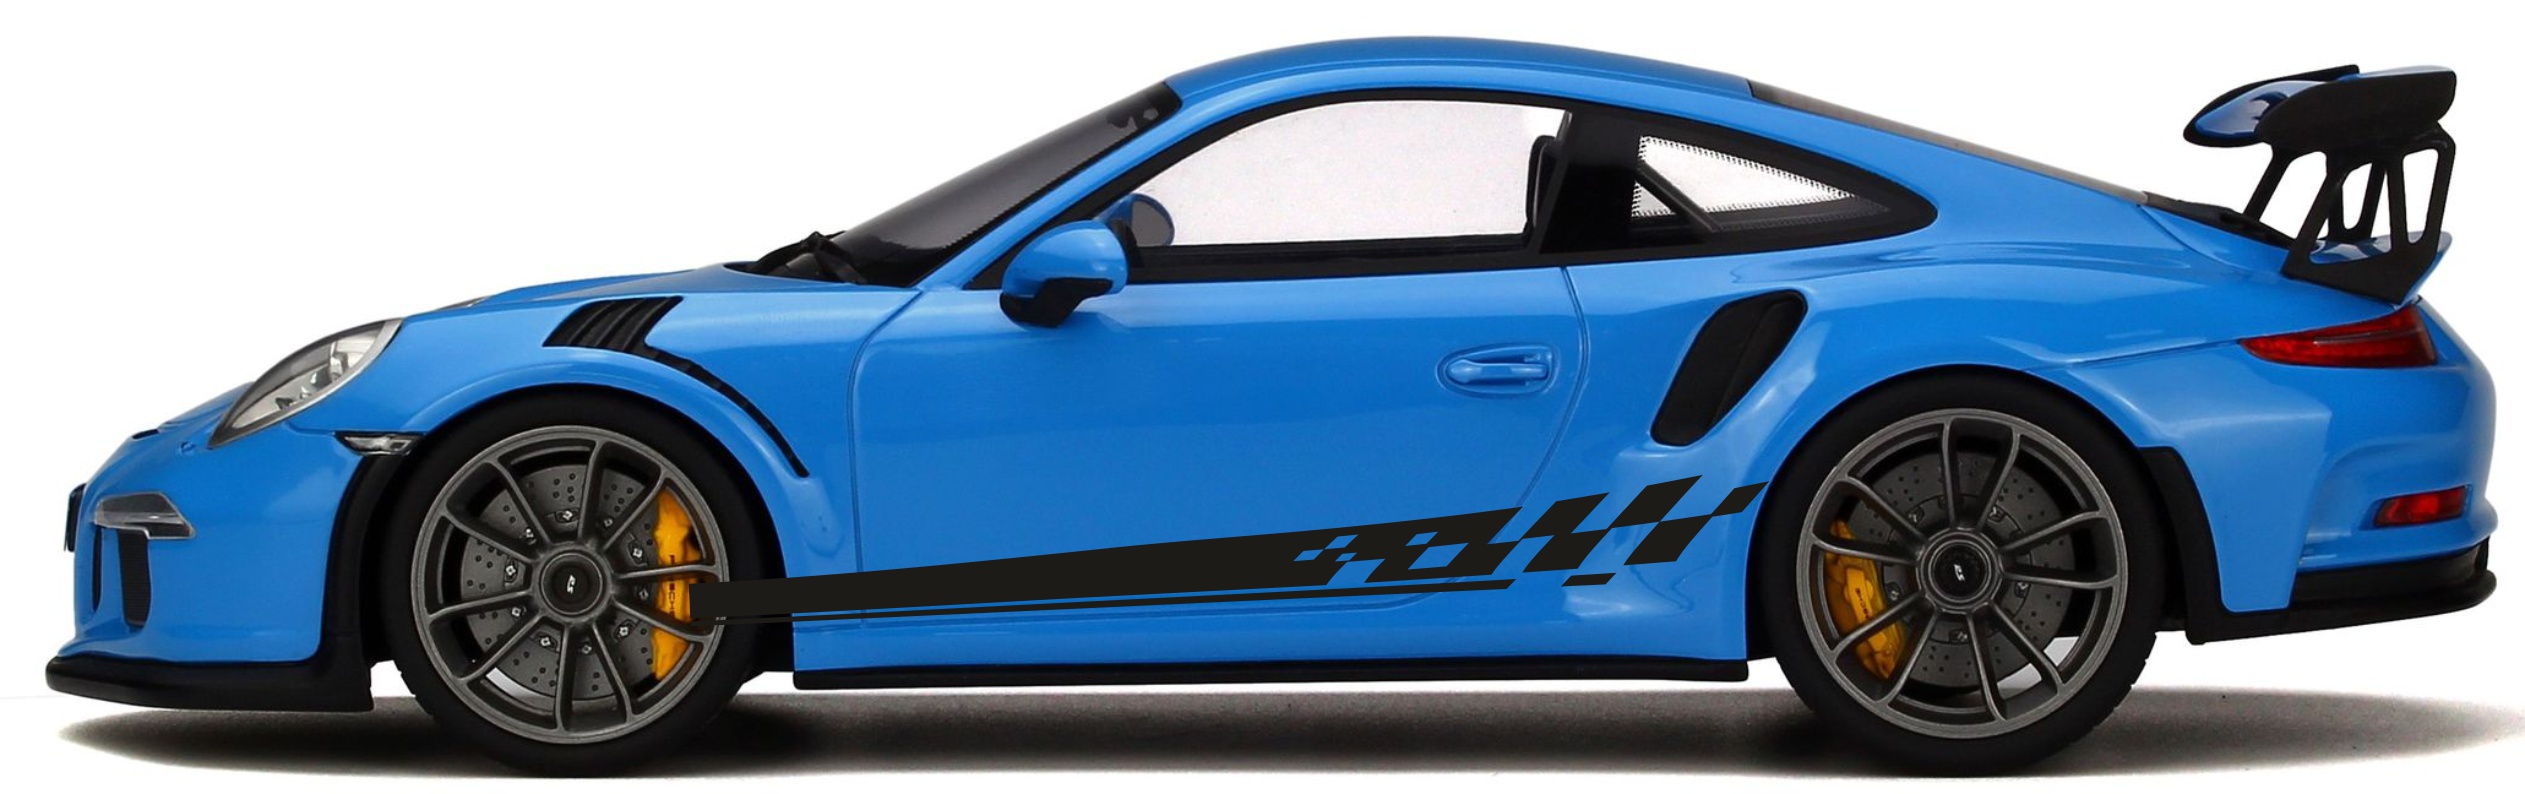 Naklejki na samochód Porsche 911 GT3 RS STICKER DECALS STRIPES